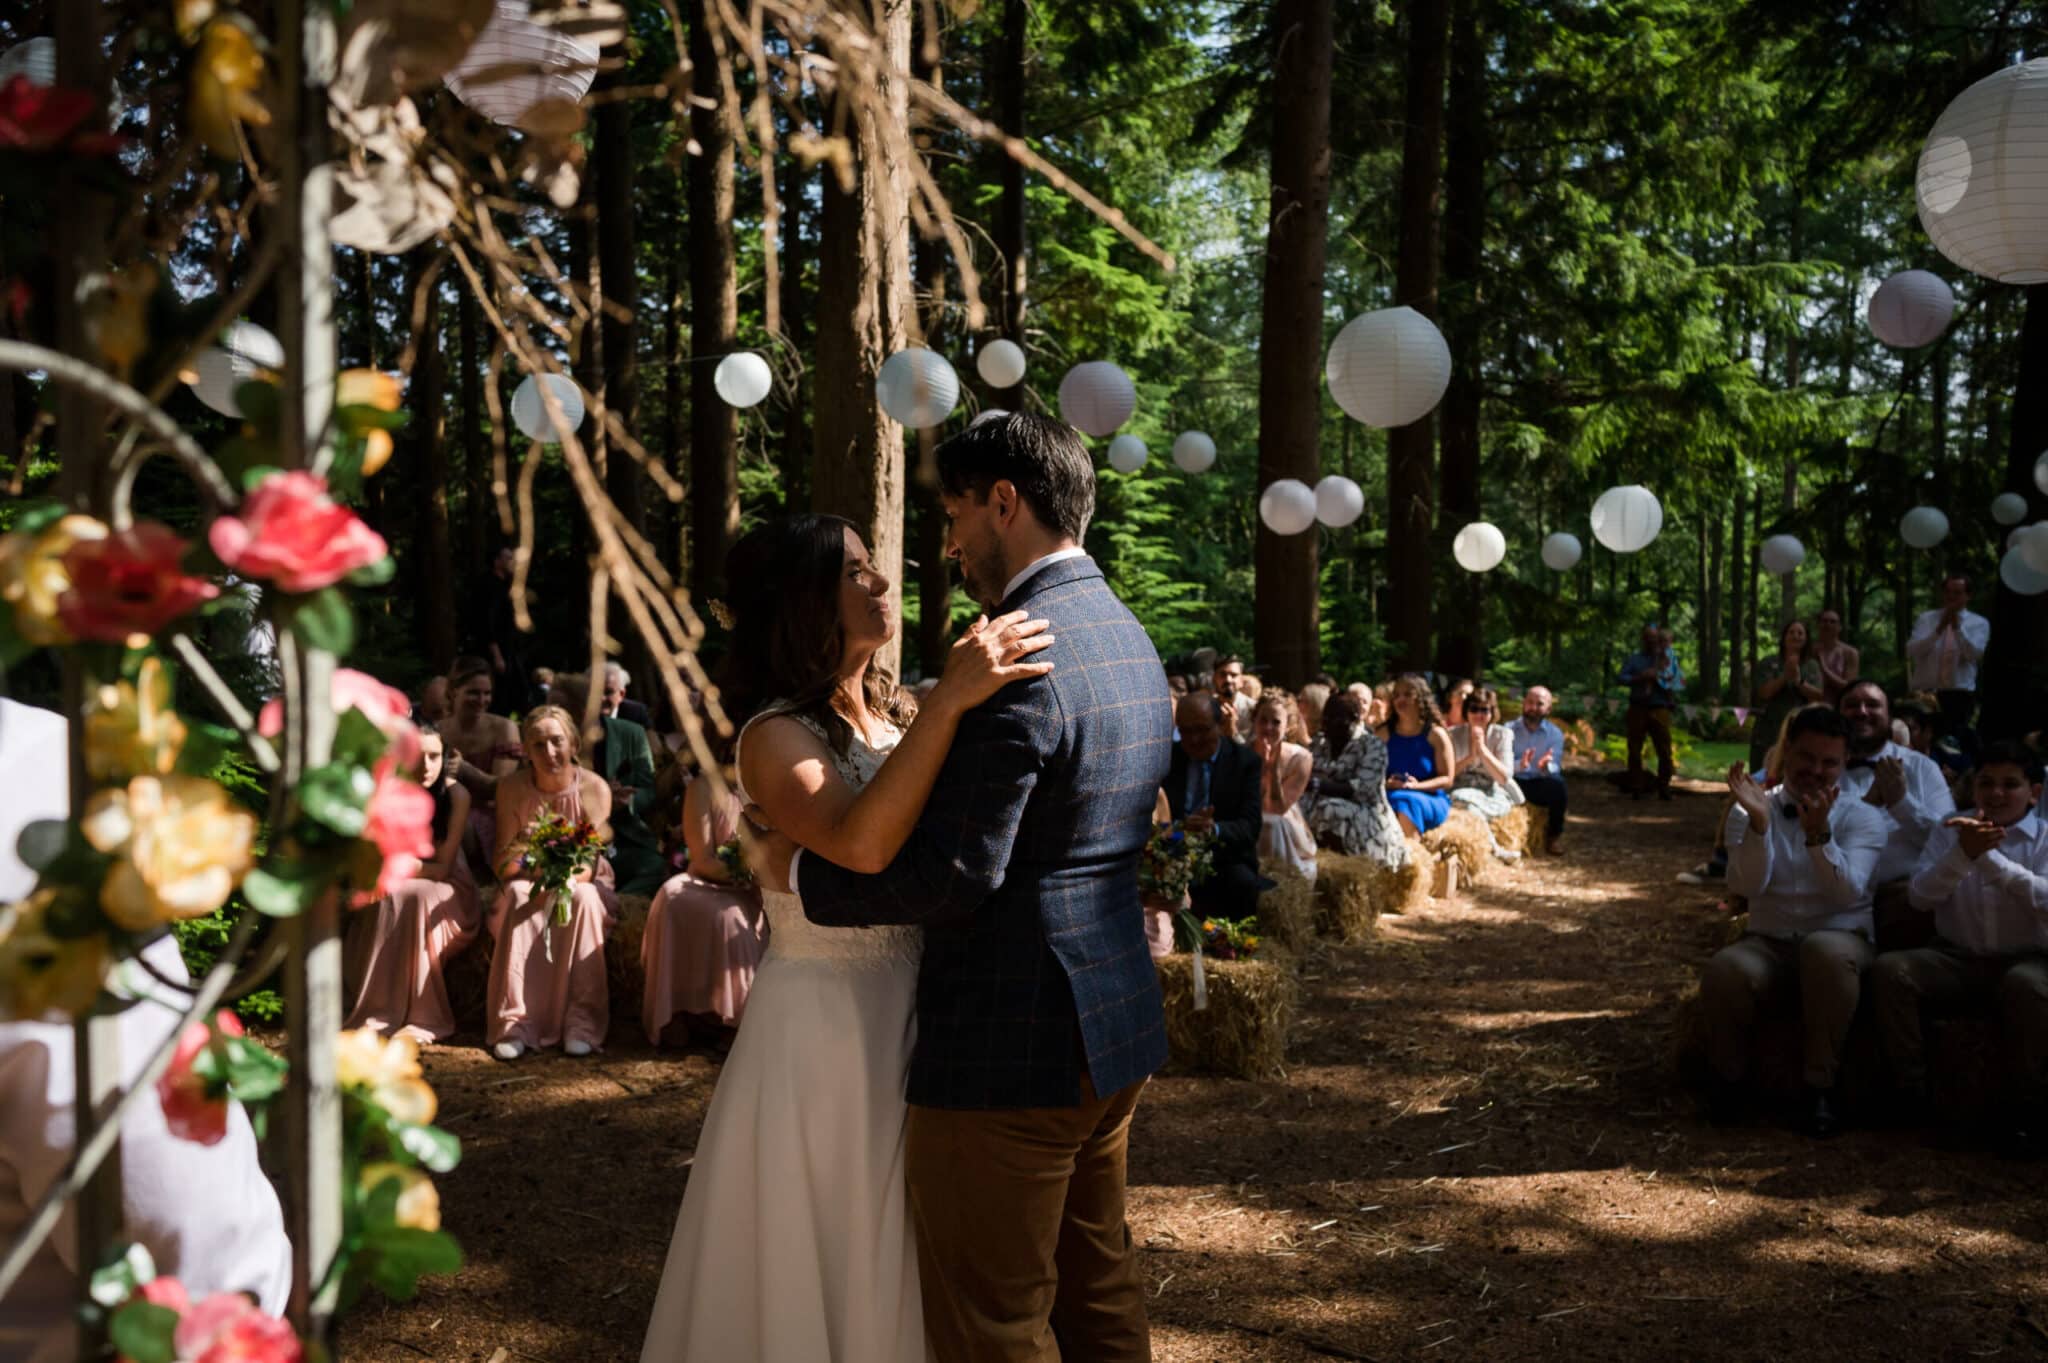 Bride and groom at Weddings in the Wood